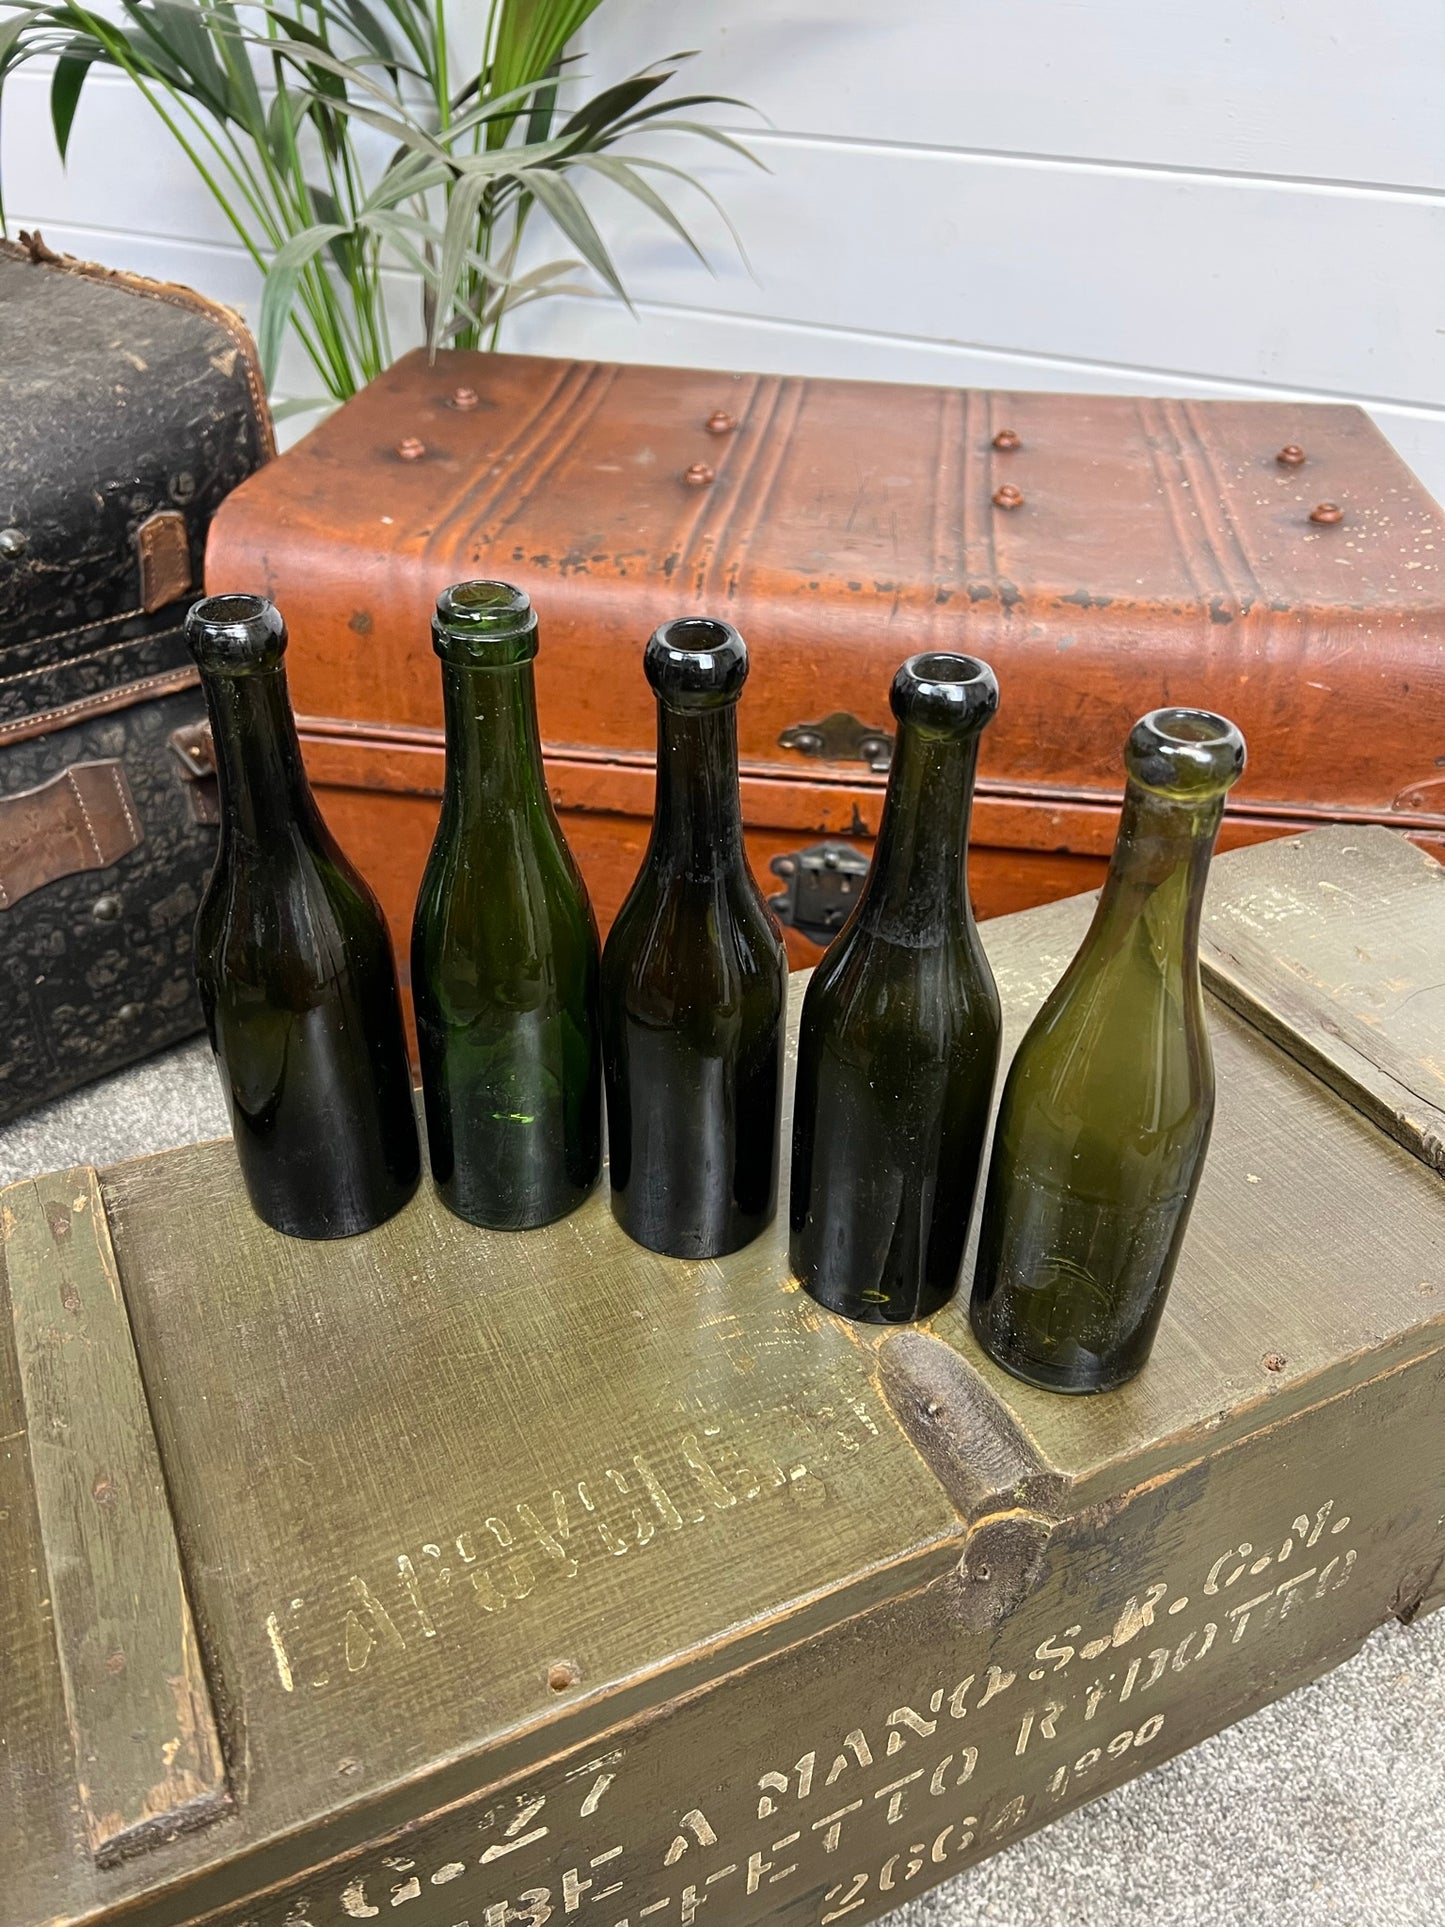 5x Vintage Green Glass Bottles Plain Decorative Codd Neck Bottle Wedding Decor Rustic Home Deco